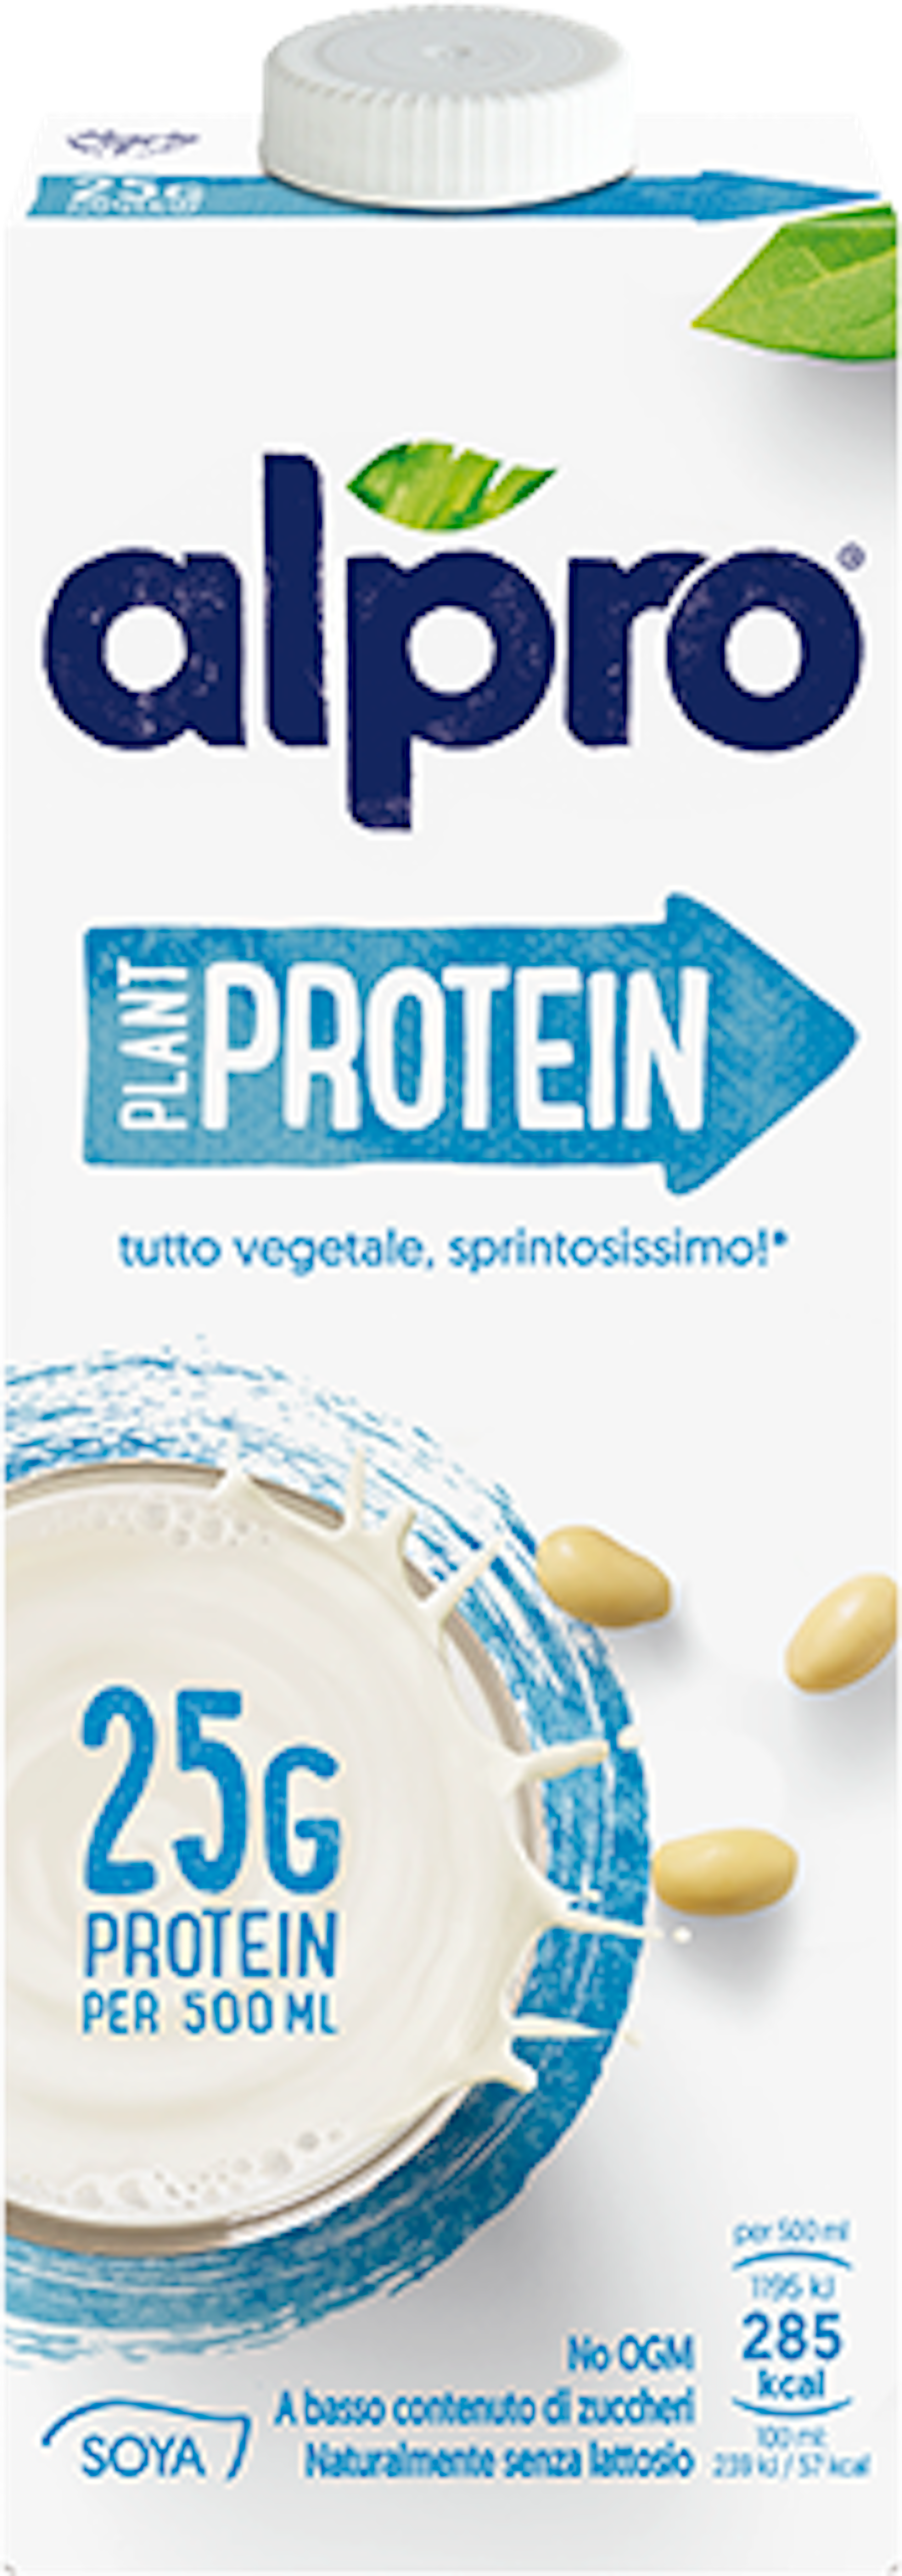 Alpro Protein